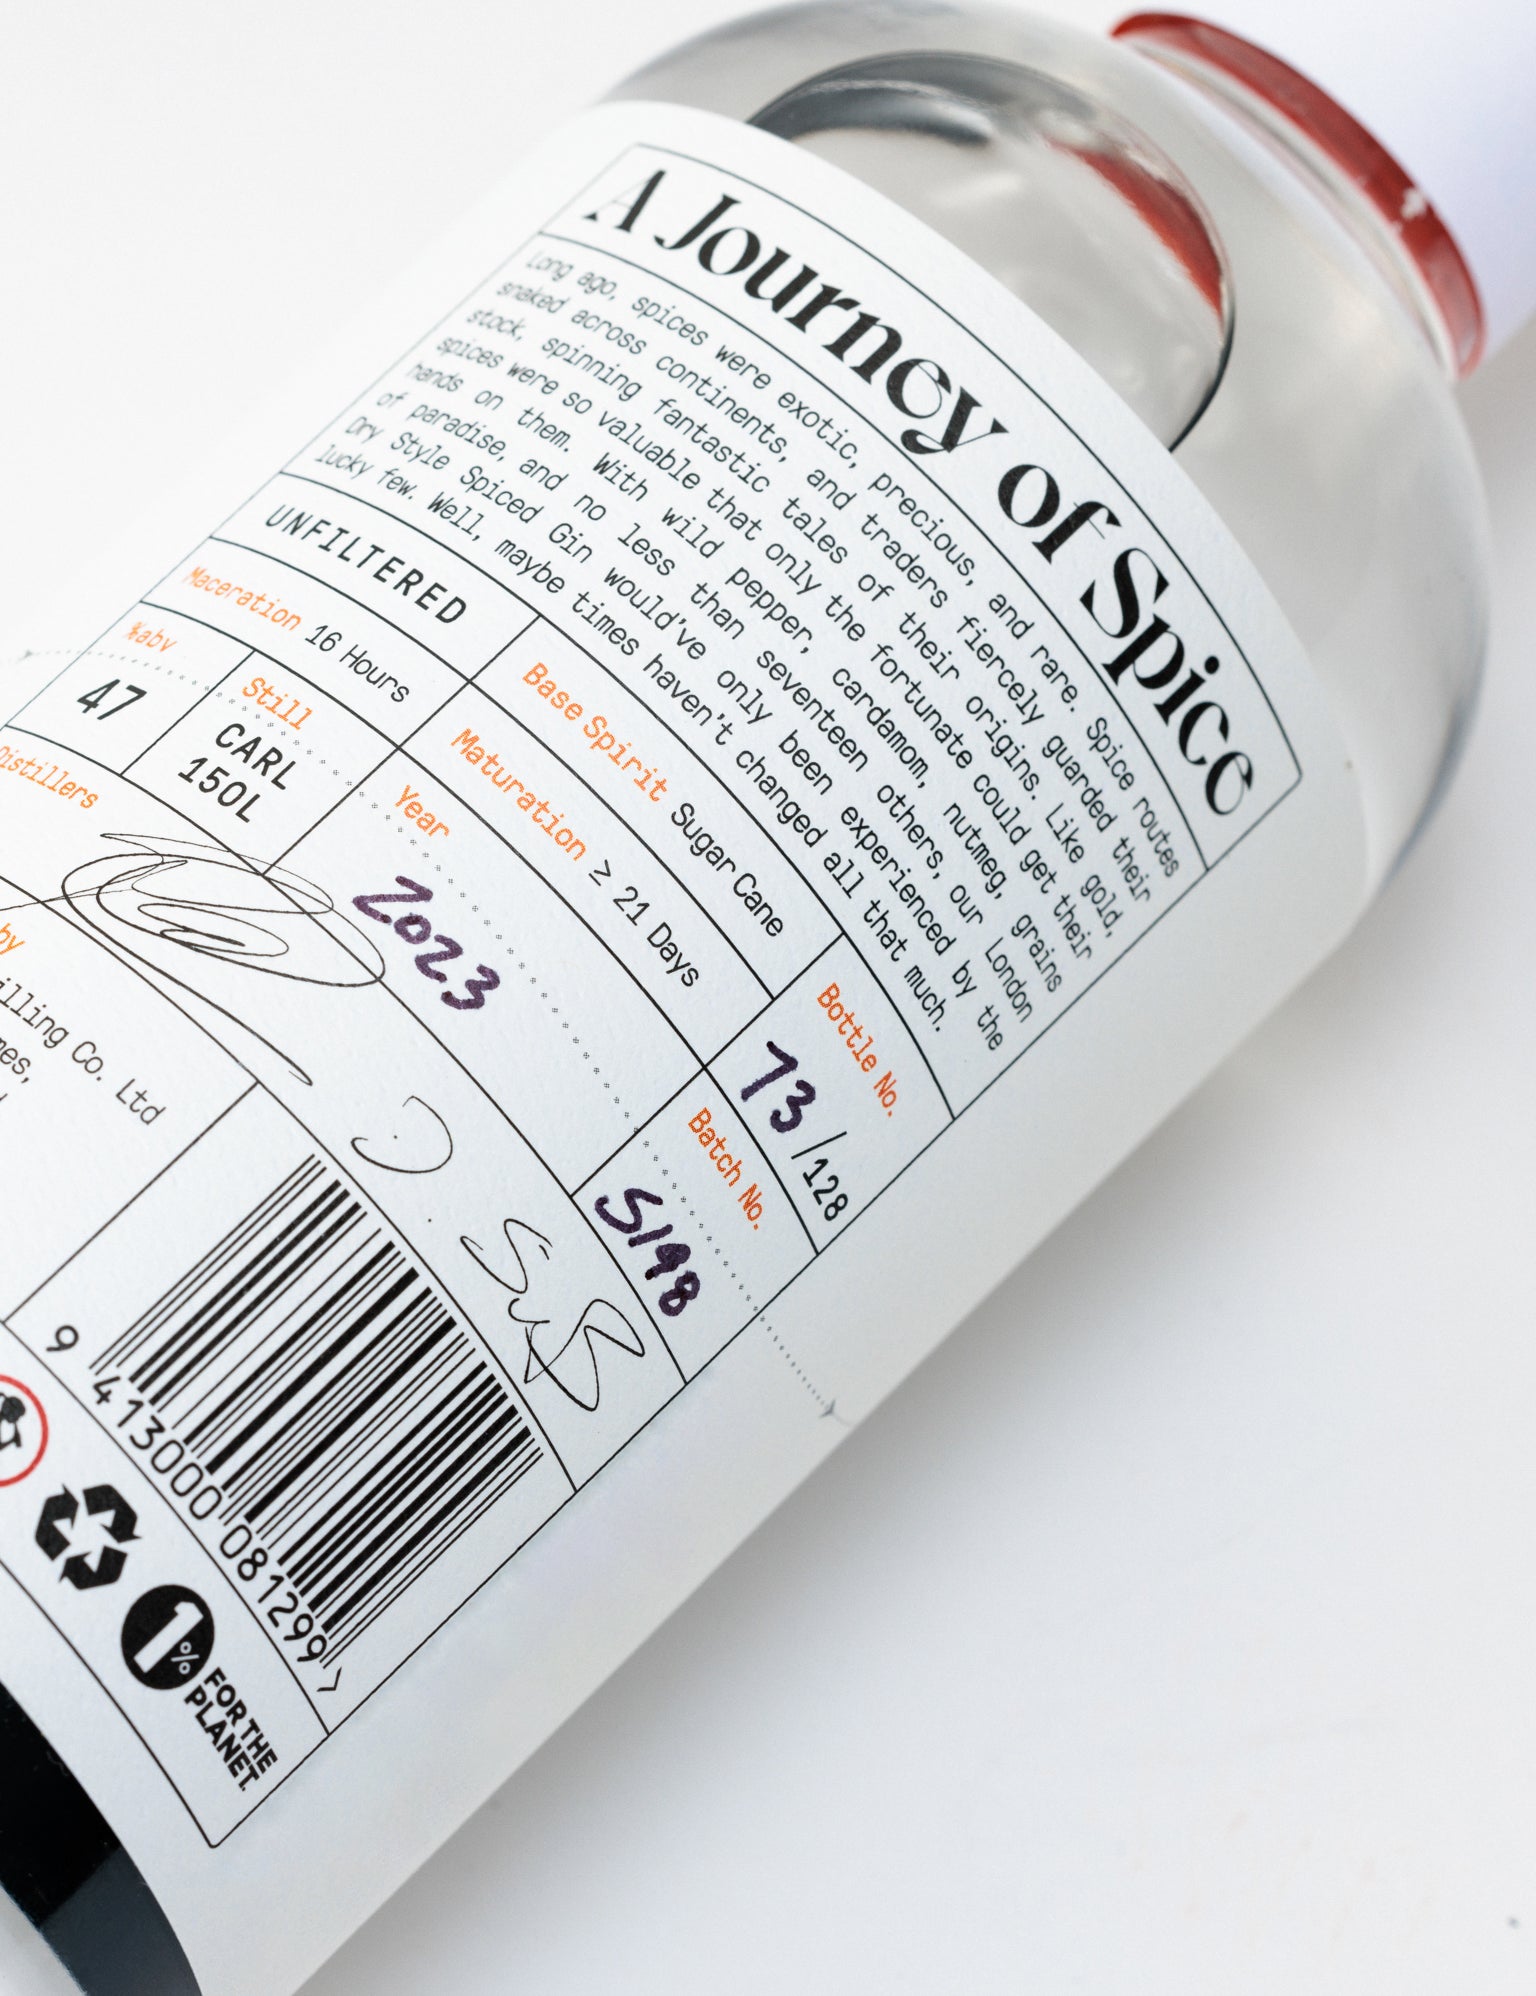 Awildian Coromandel Spiced Gin label details